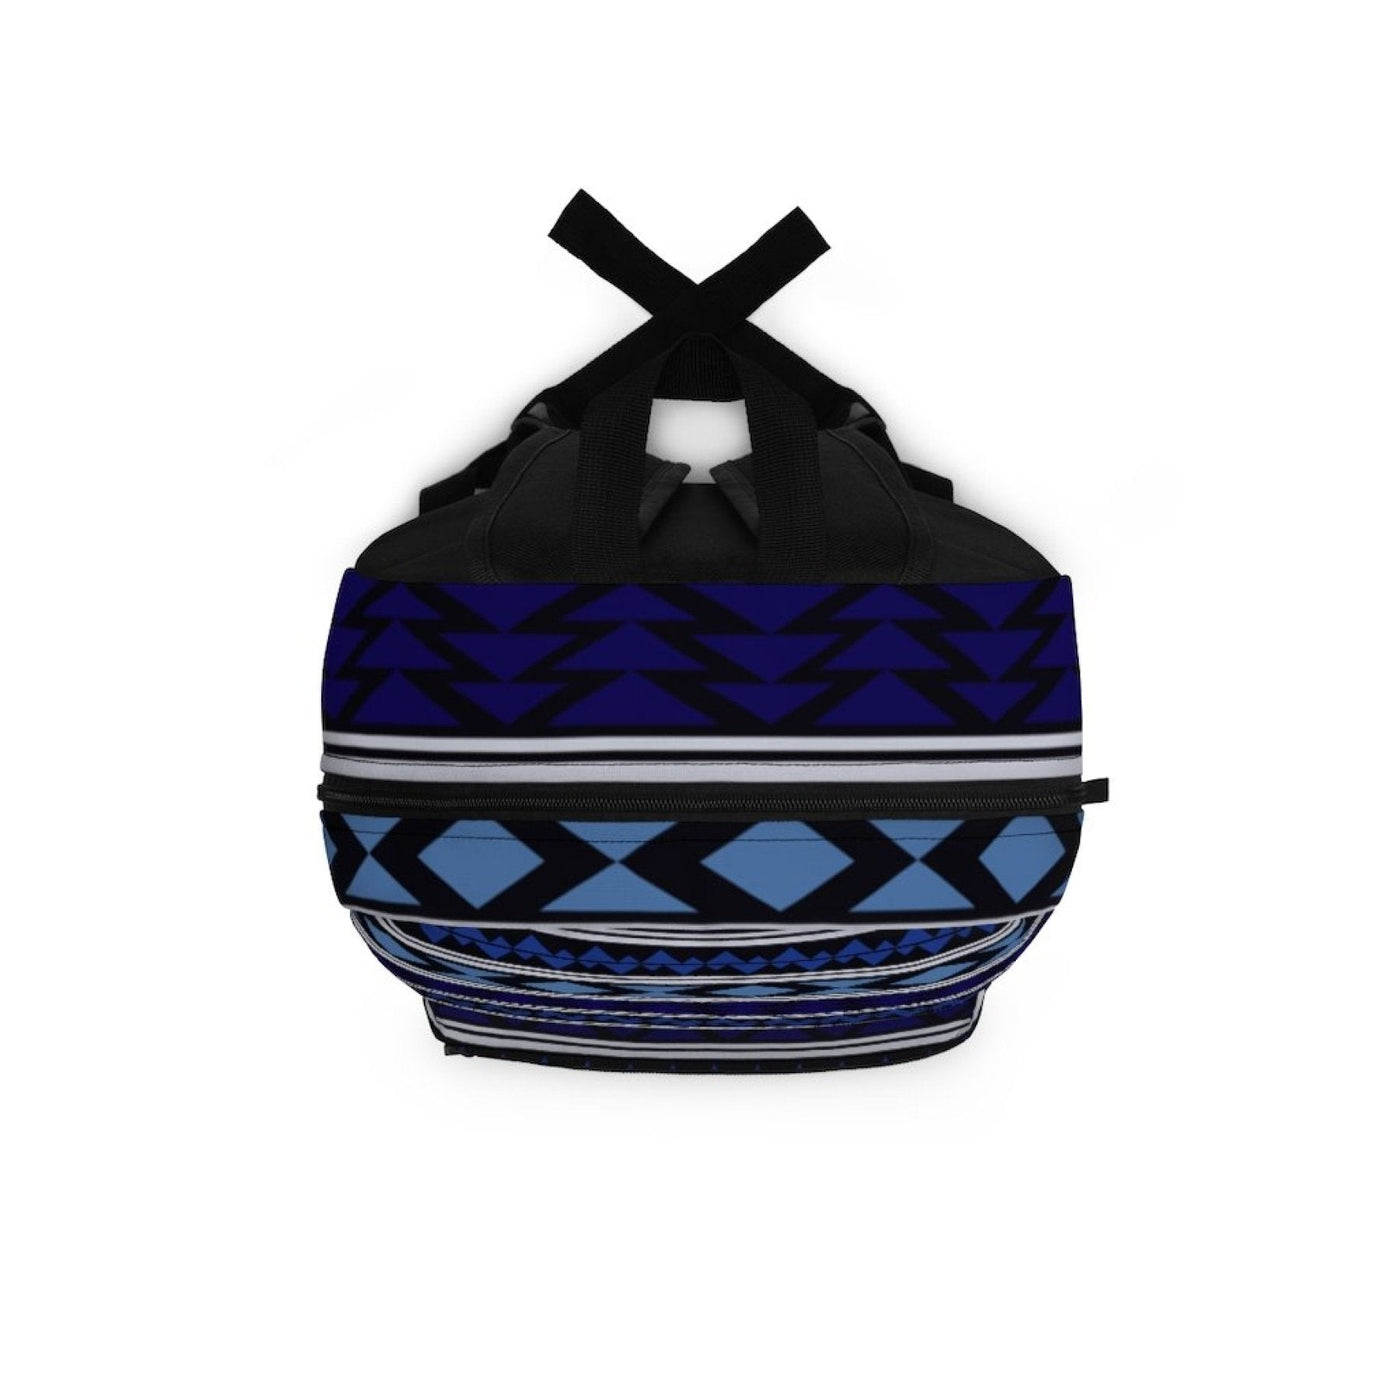 Backpack - Large Water-resistant Bag Navy Blue Black Multicolor Aztec Tribal -